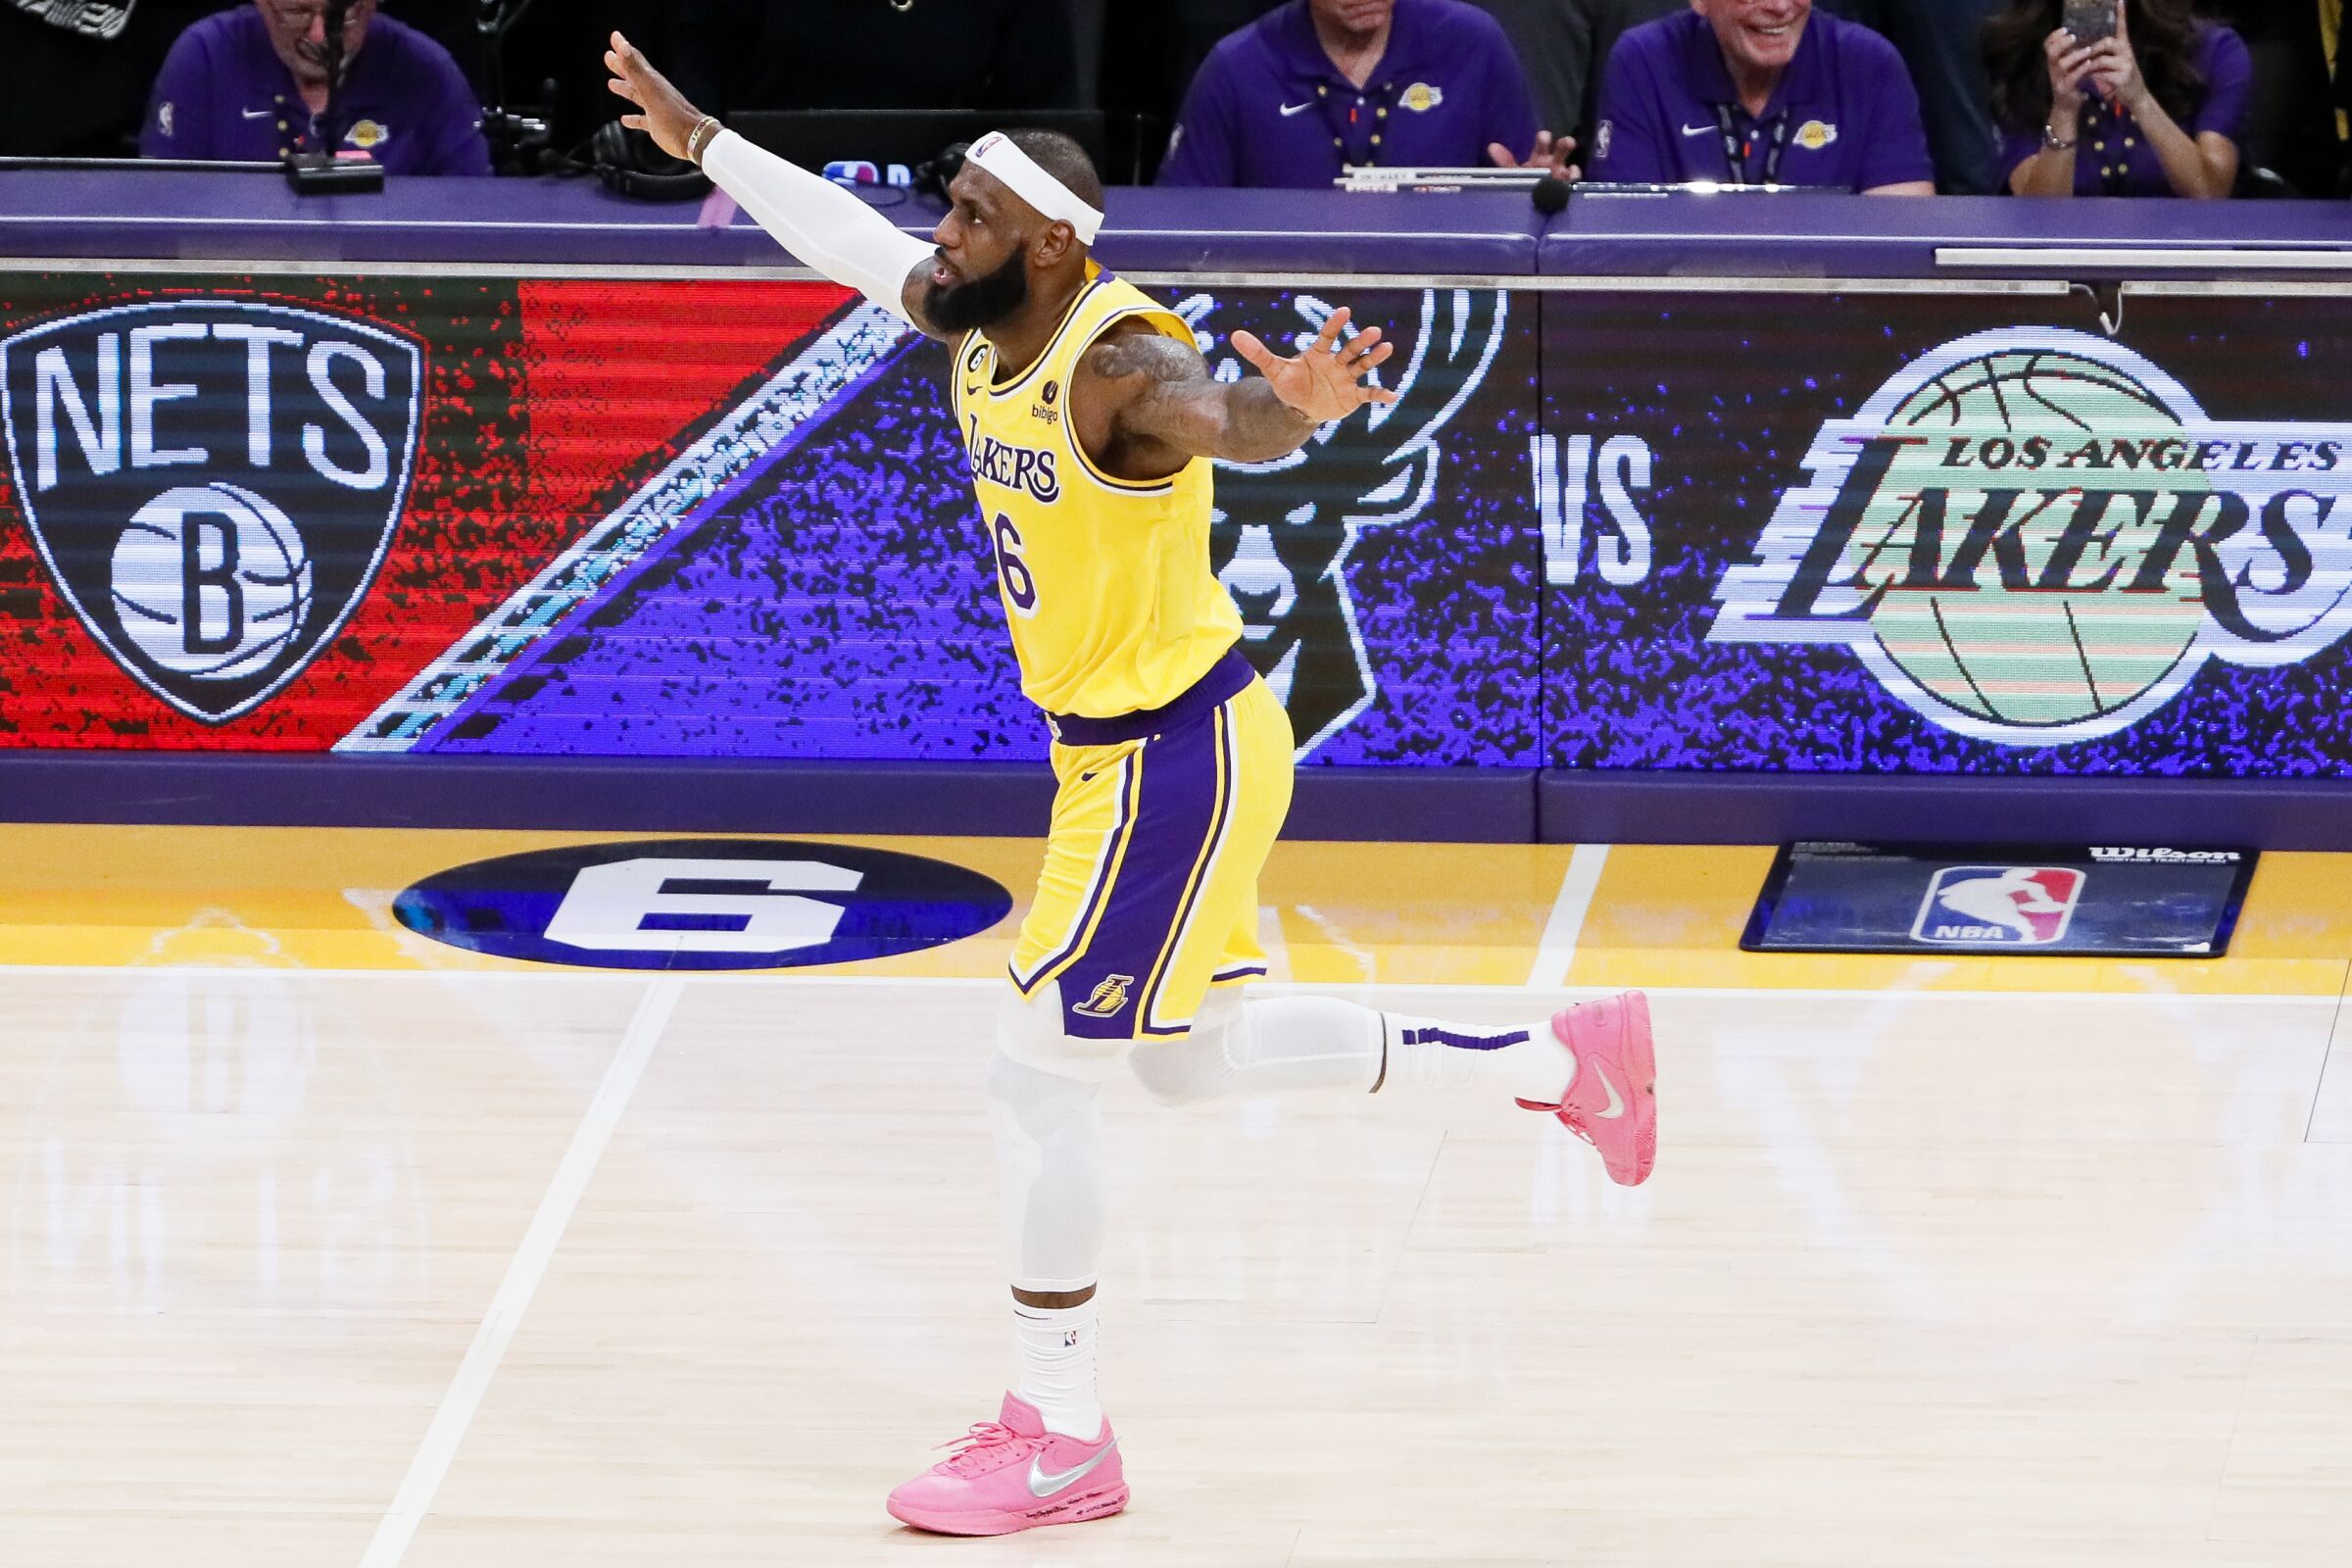 LOS ANGELES, CA - FEBRUARY 07: Los Angeles Lakers forward LeBron James (6) celebrates